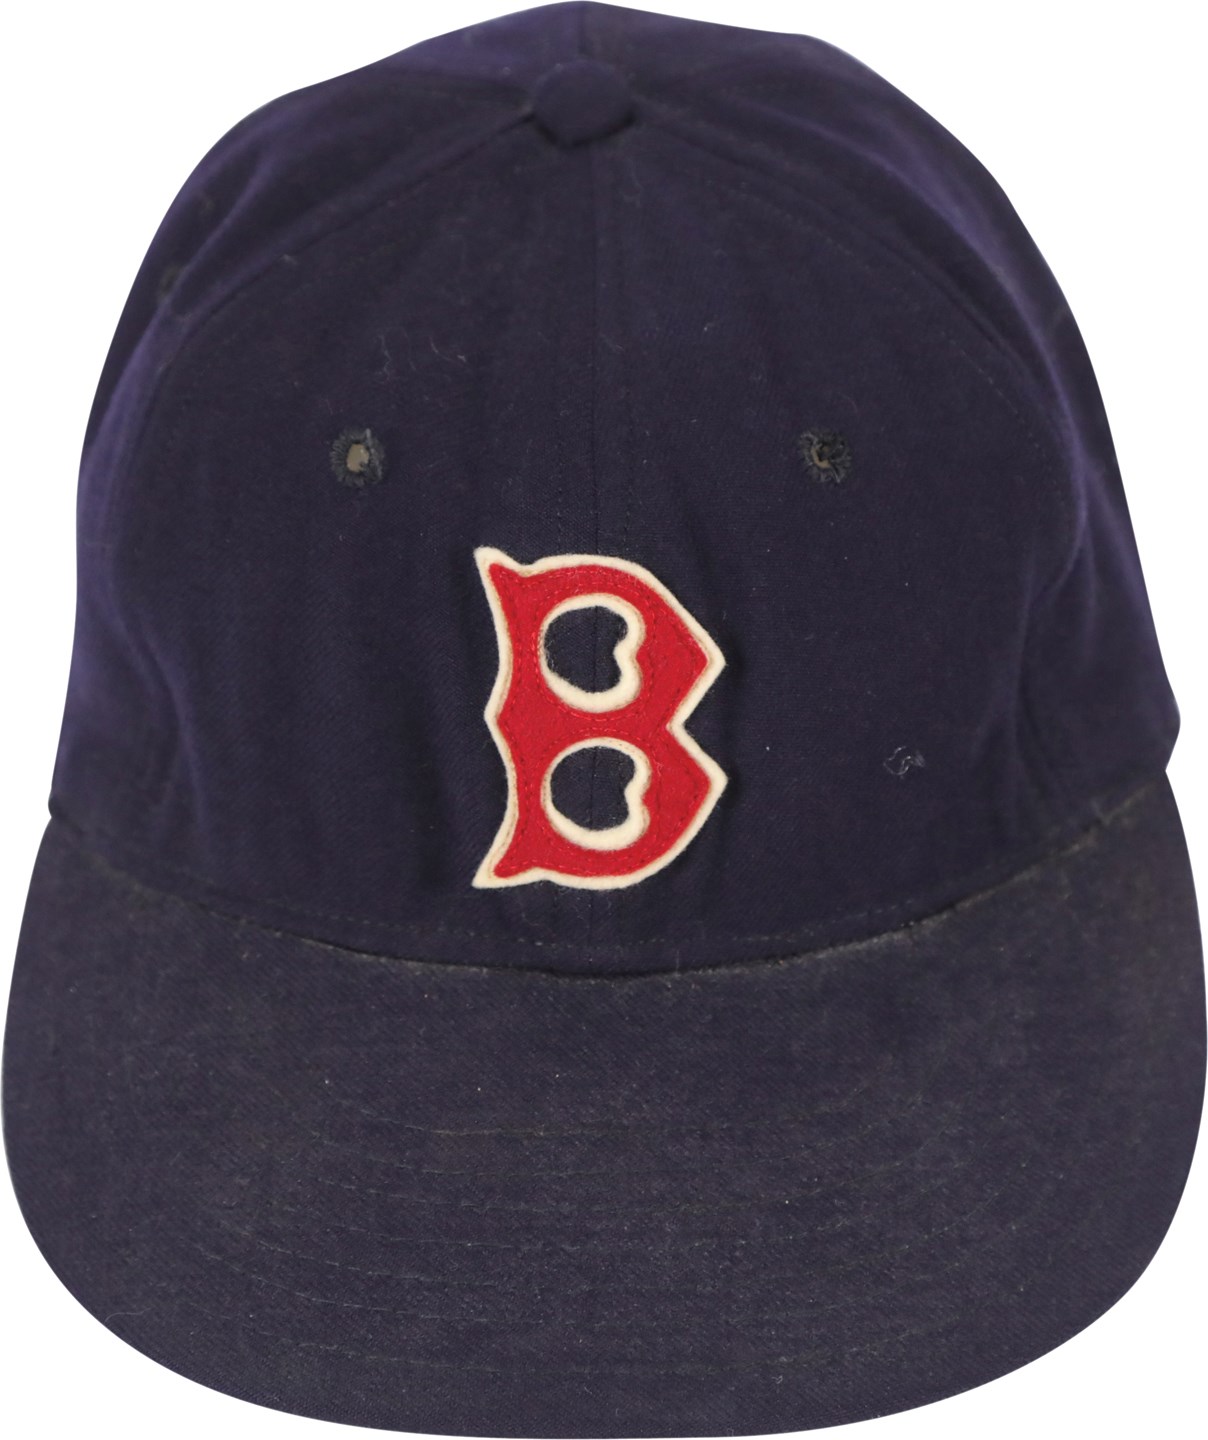 Baseball Equipment - 1940s Boston Red Sox Professional Model Cap w/Sewn on Felt "B"